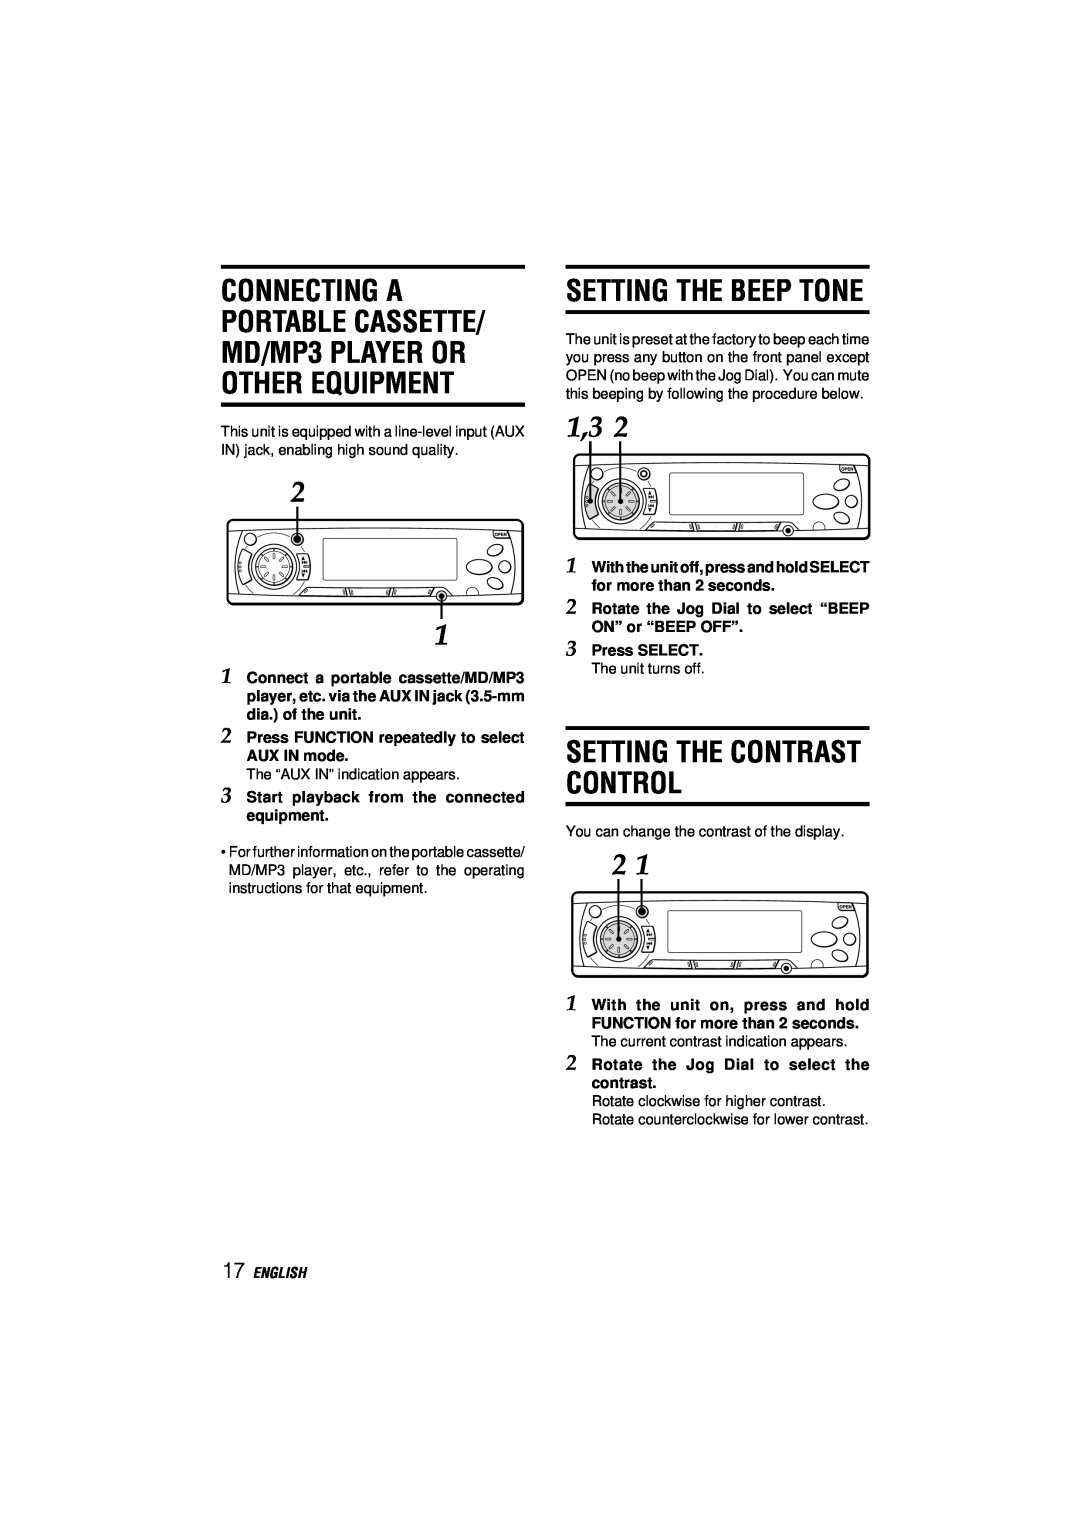 Aiwa CDC-MP3 manual Setting The Beep Tone, Setting The Contrast Control, English 